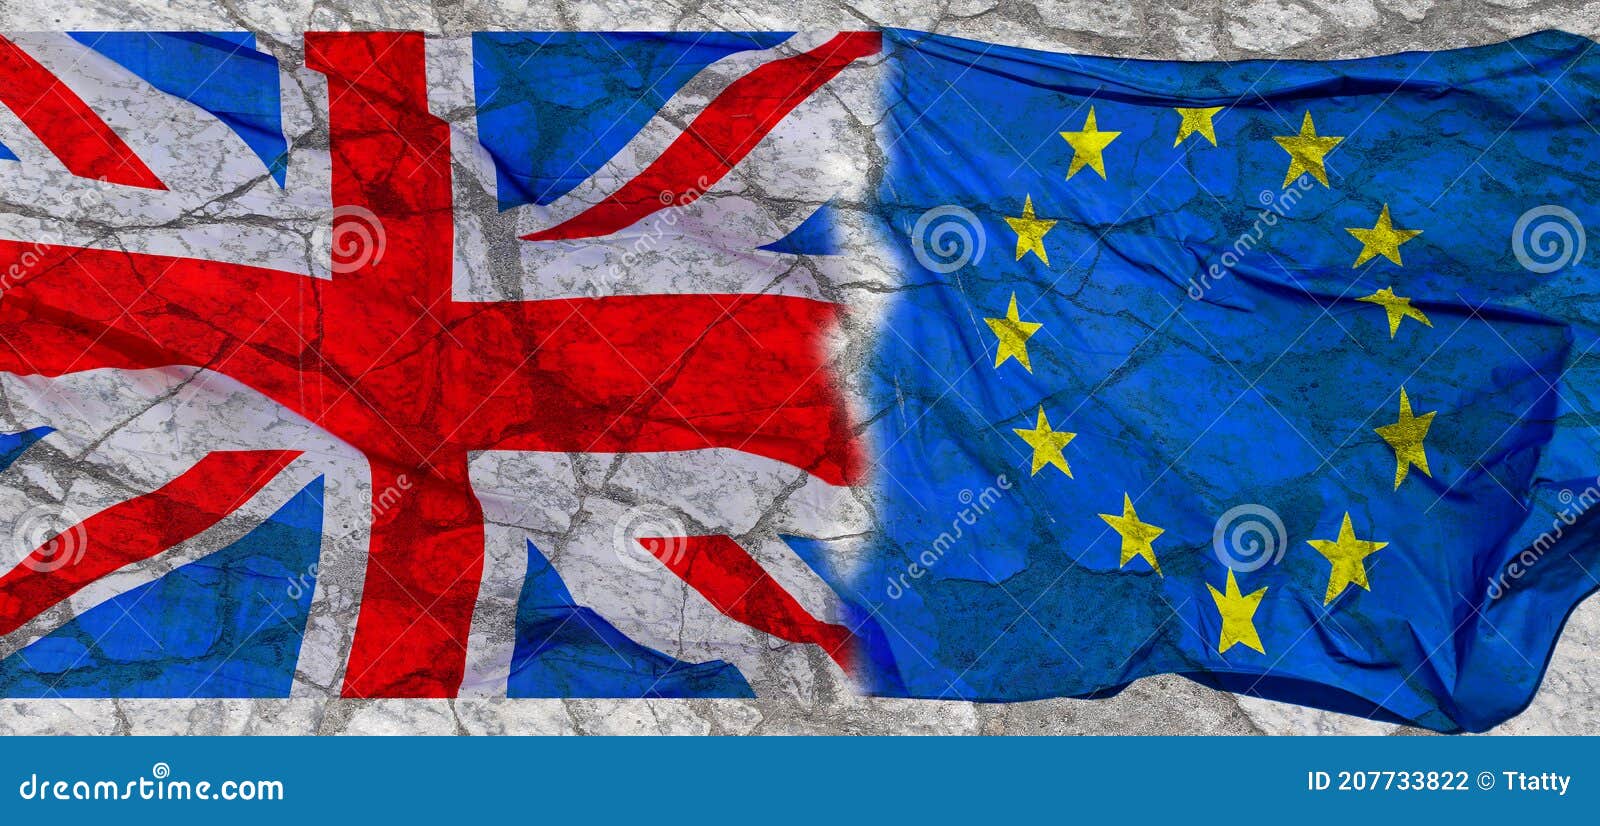 UK and EU distressed flags stock illustration. Illustration of flag ...